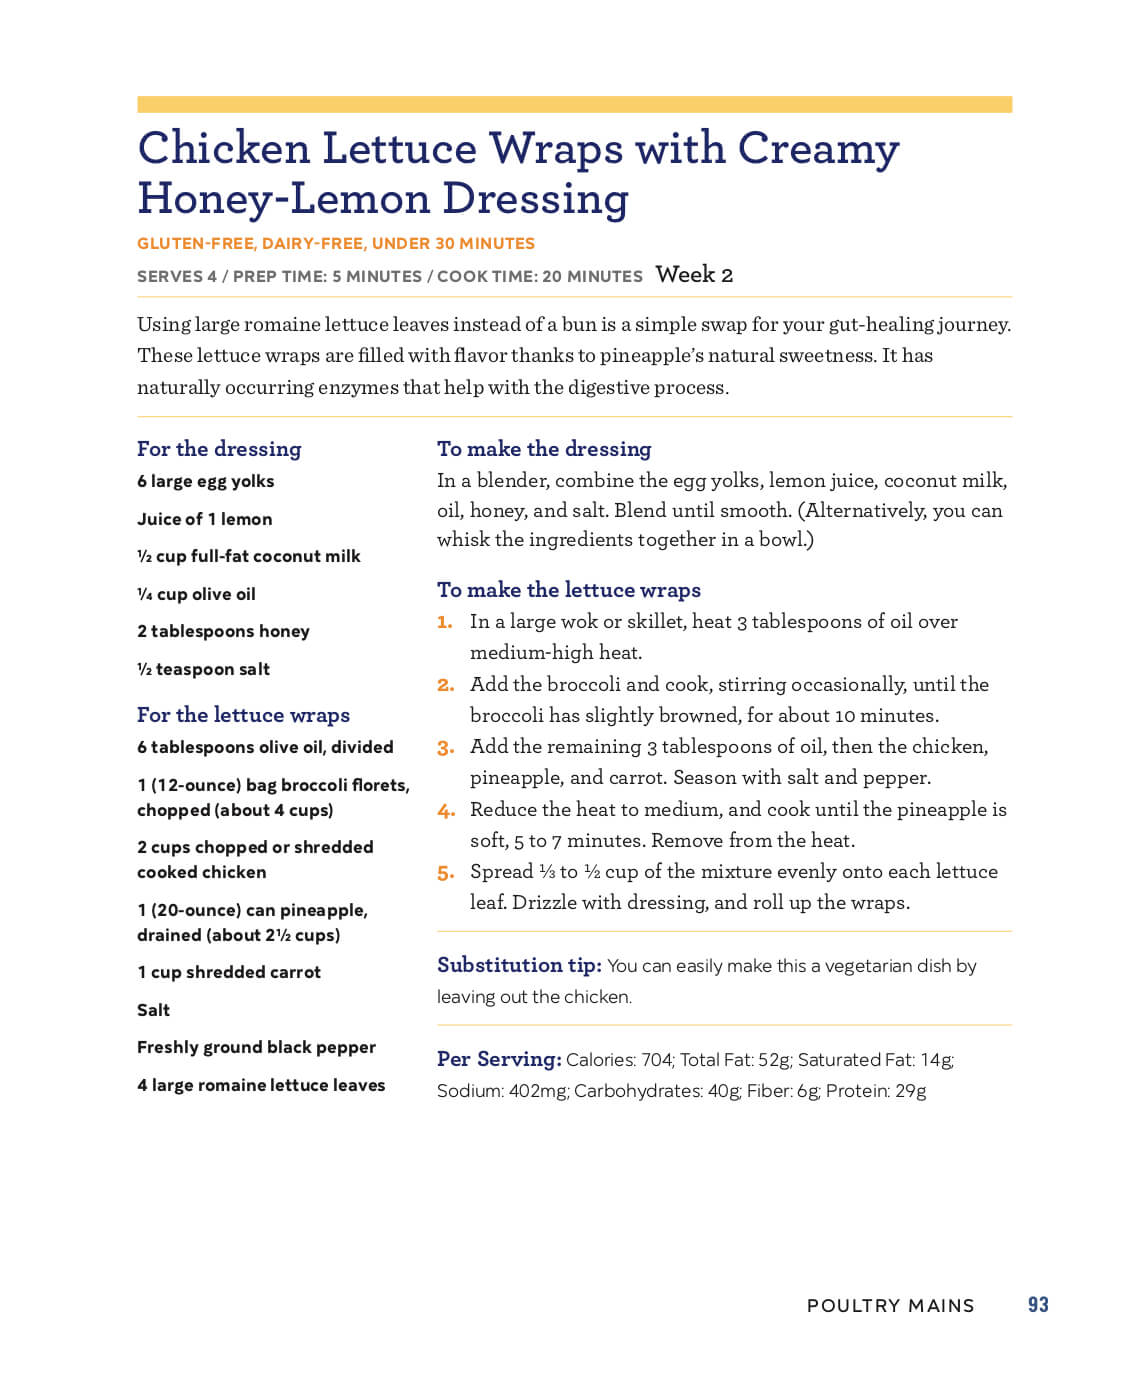 Chicken Lettuce Wraps with Creamy Honey-Lemon Dressing agutsygirl.com Callisto Leaky Gut Meal Plan book #leakygut #paleorecipes #lettucewraps